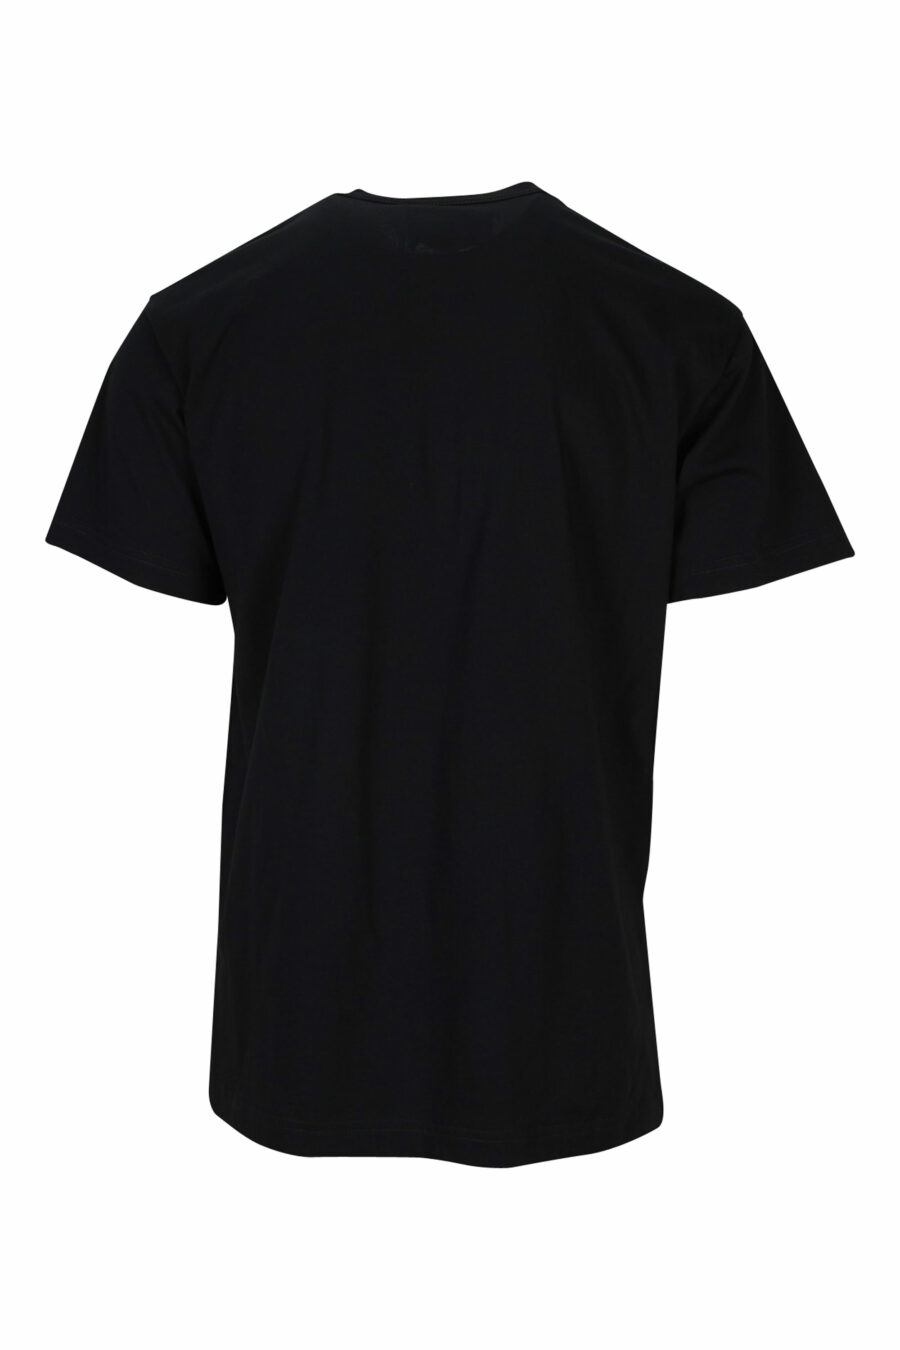 Camiseta negra con maxilogo barroco muticolor - 8052019504057 1 1